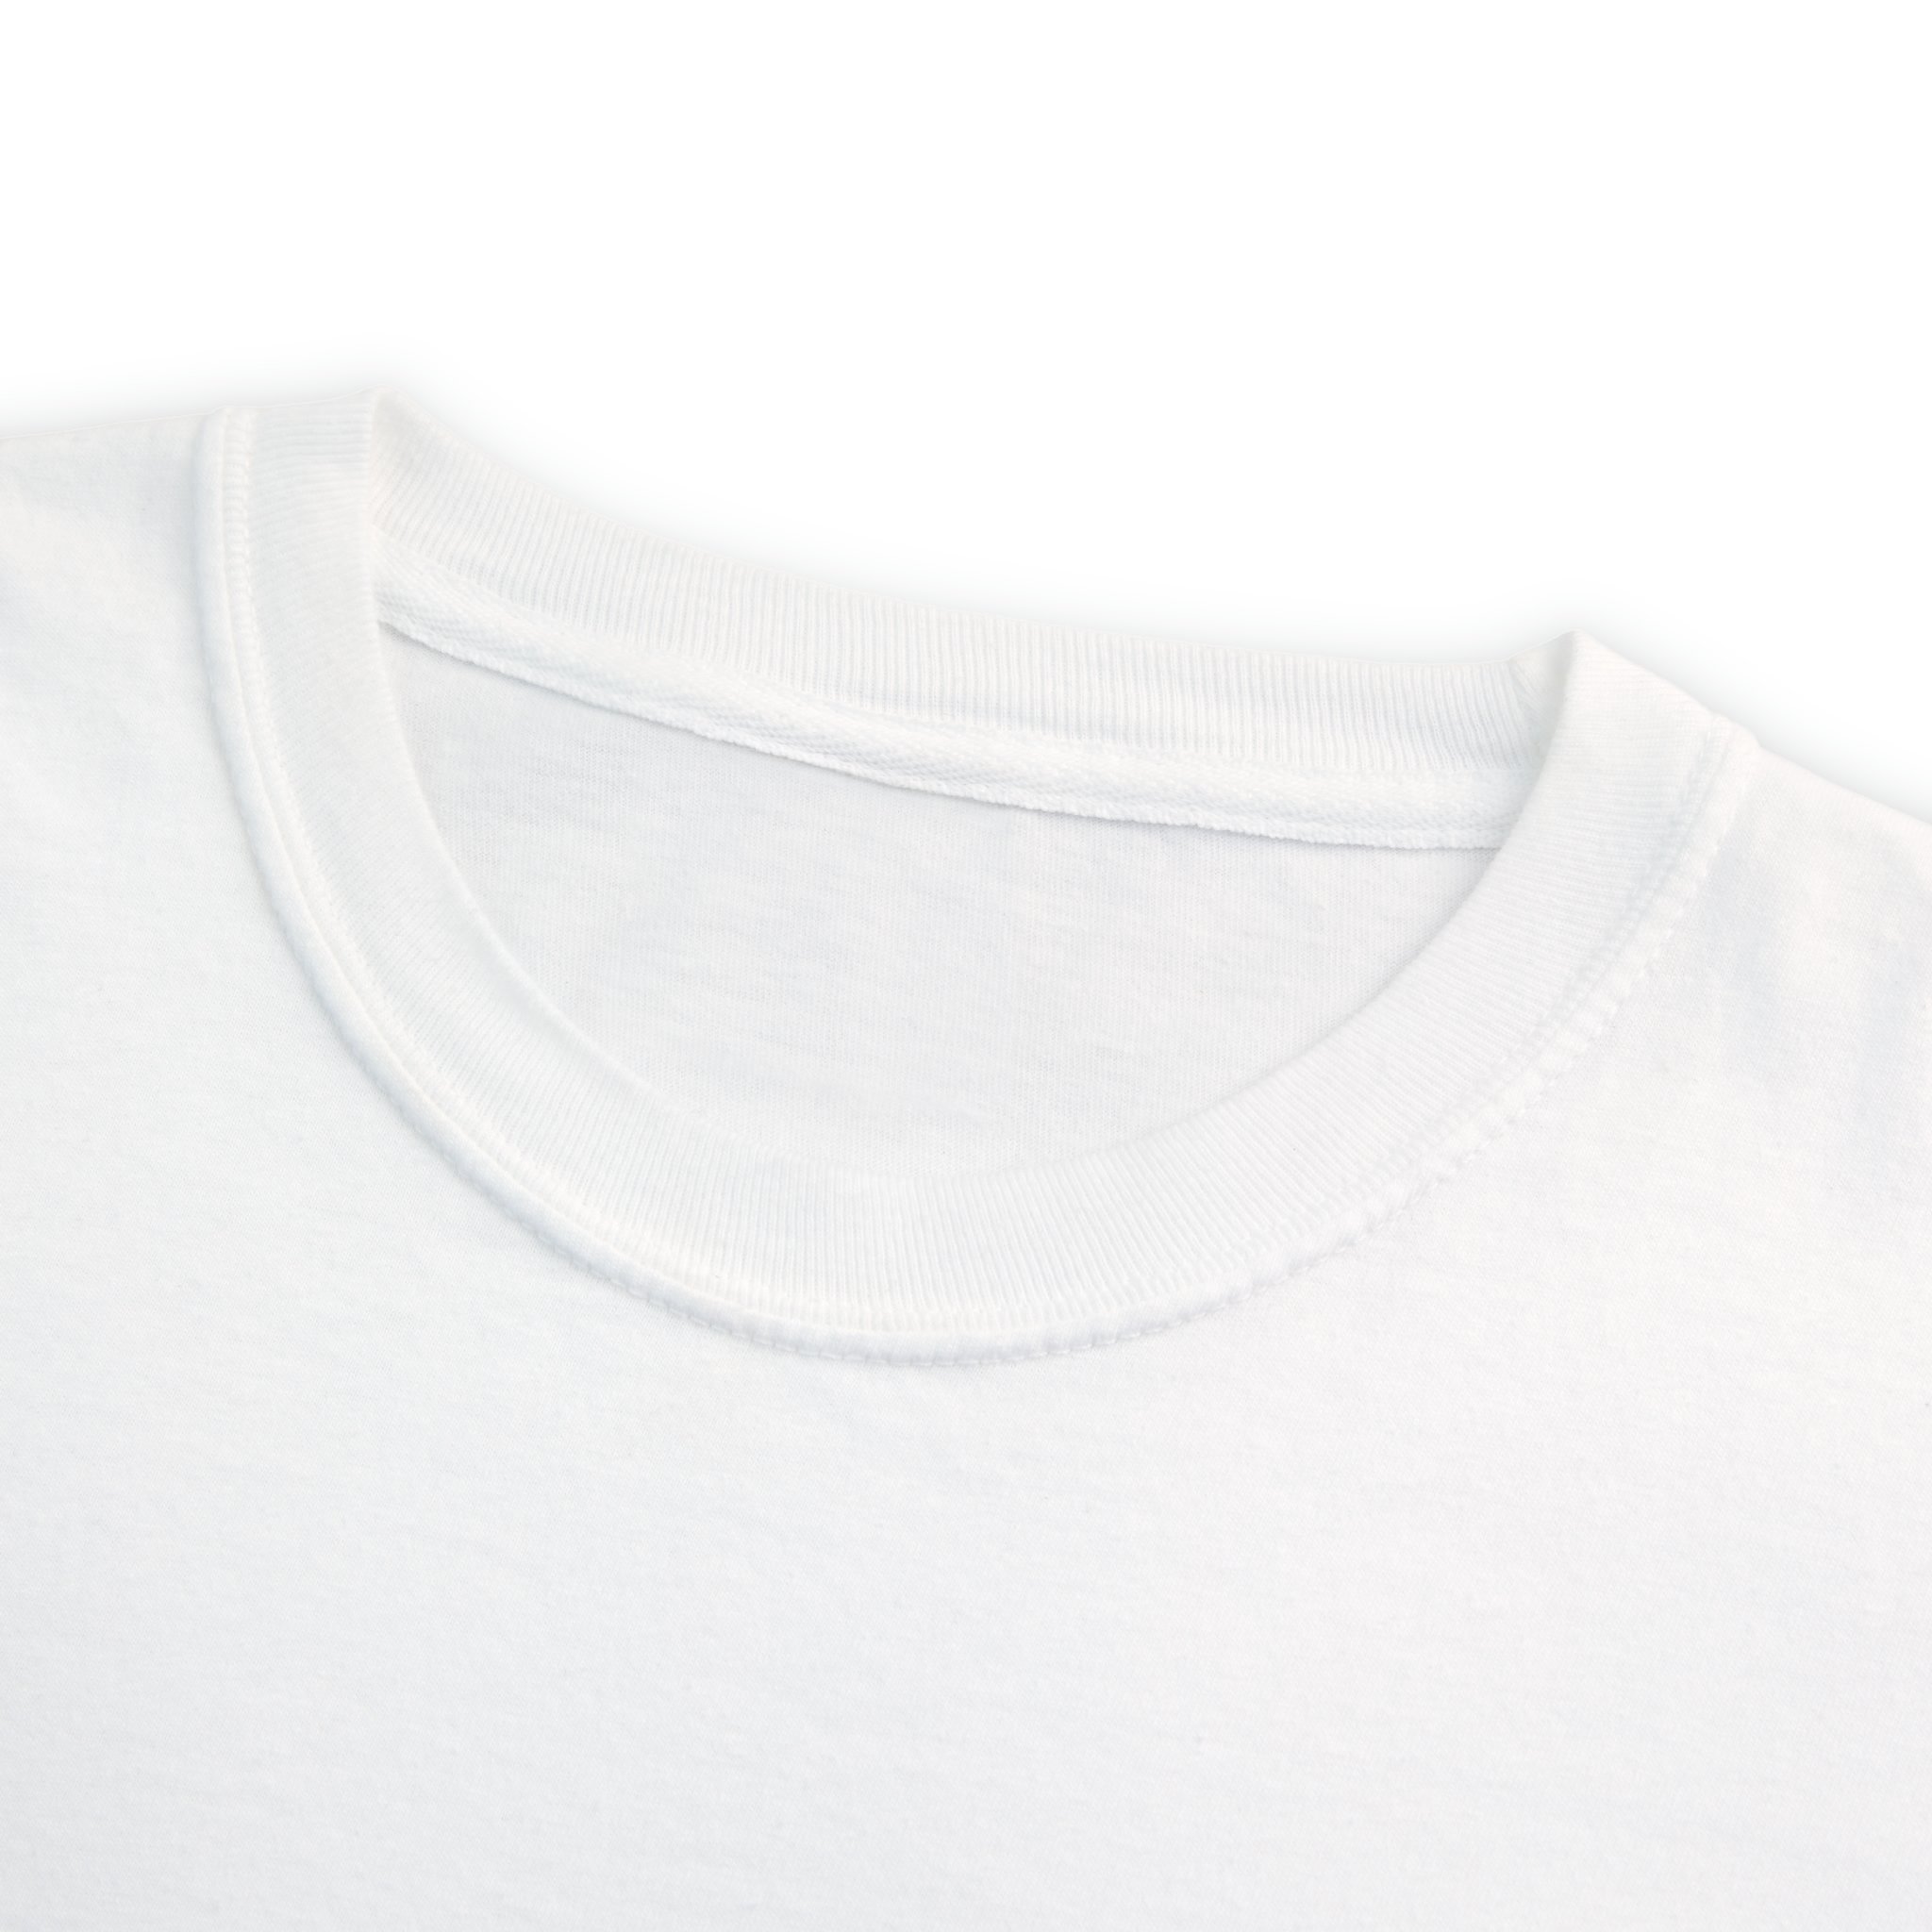 Unisex Pocket T-Shirt #8 Front Collar Closeup (3)